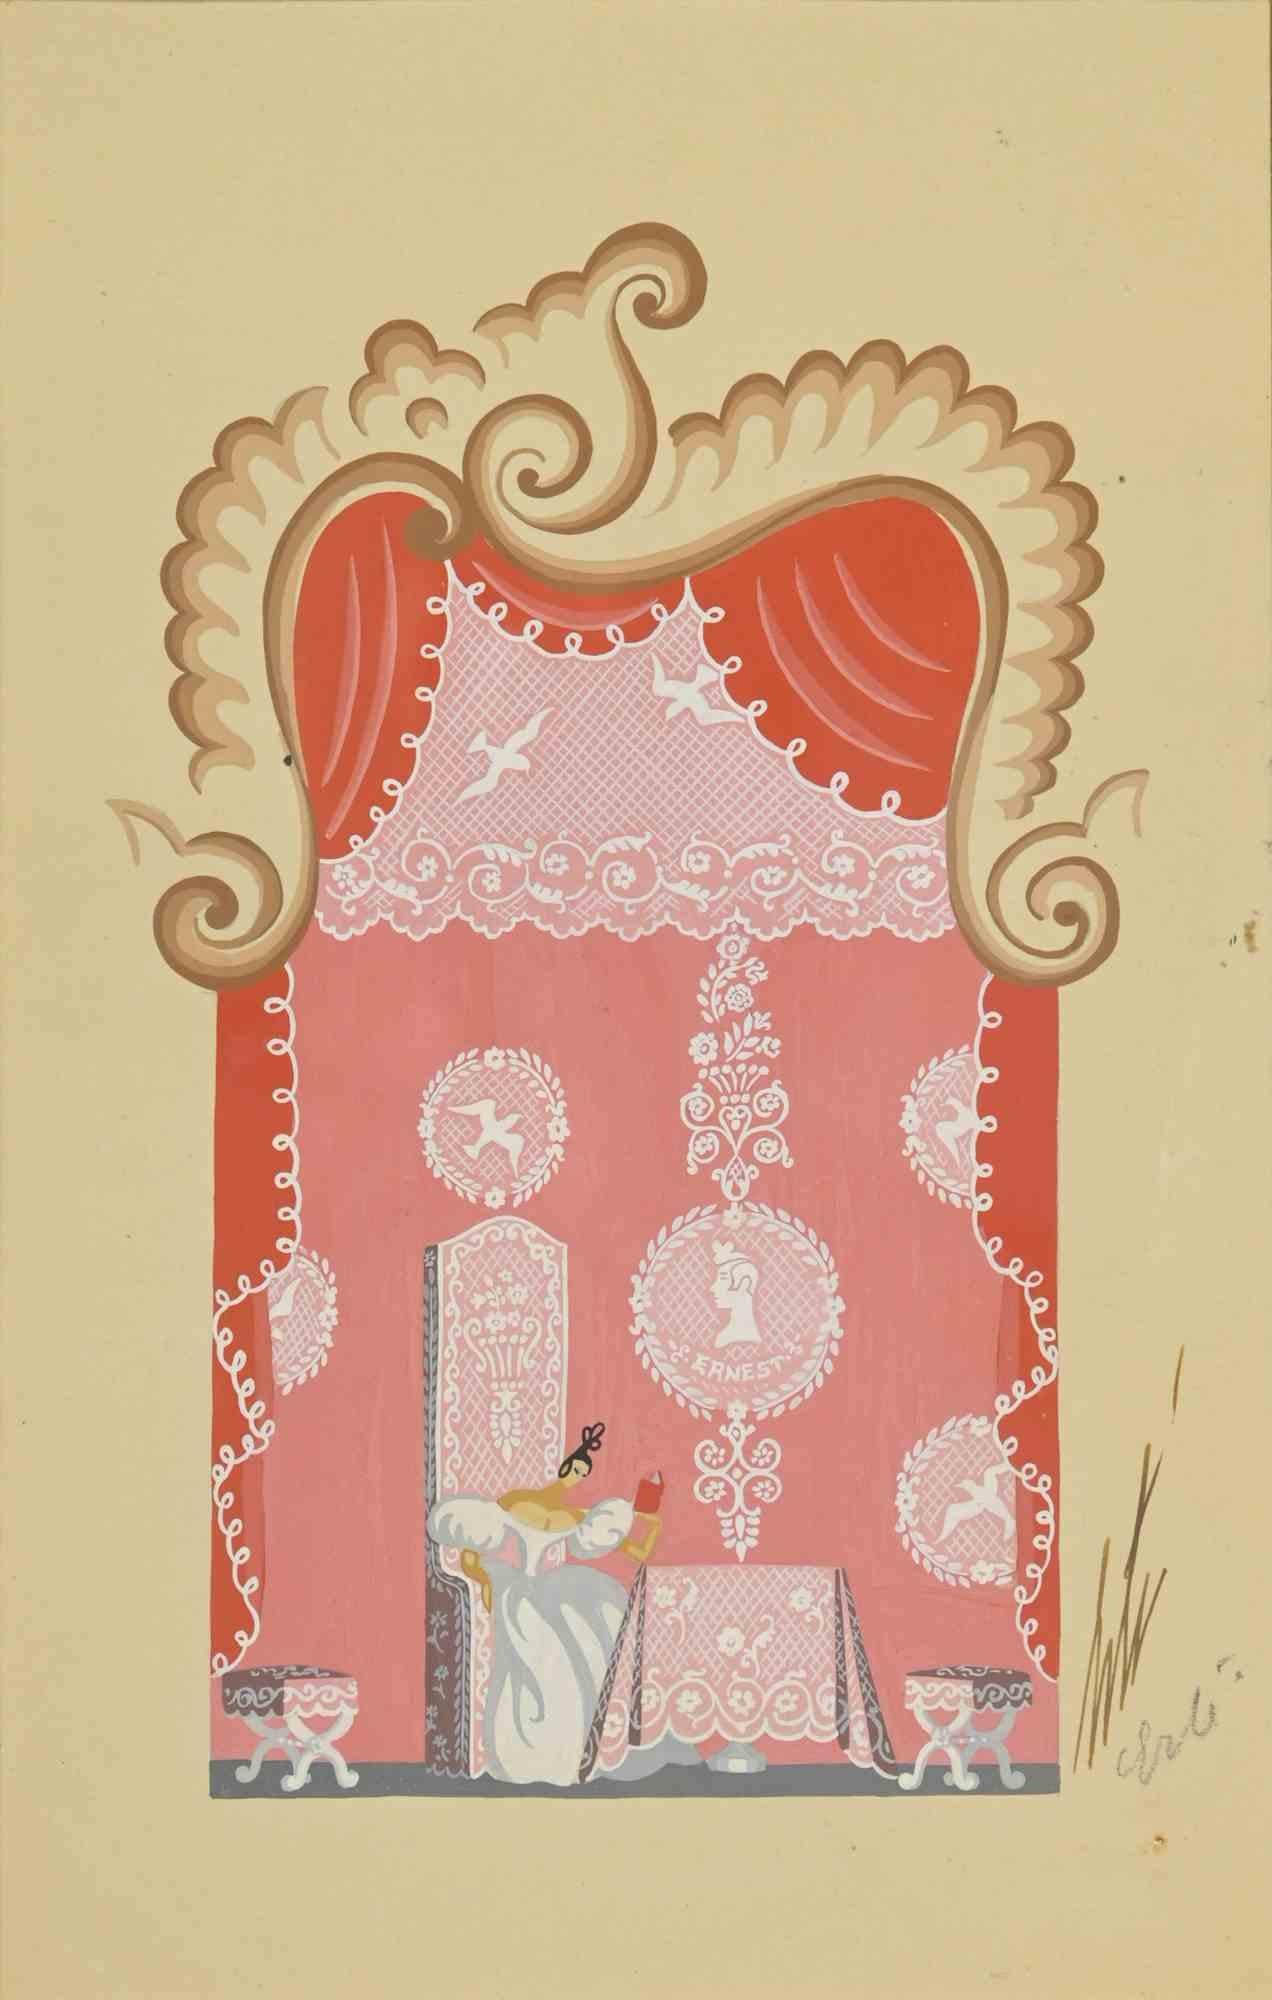 Norina's Room is an artwork realized by Erté (Romain de Tirtoff).

Gouache on paper, hand signed lower right. Titled on rear.

cm. 28x18

Good conditions.

 

Romain de Tirtoff, known as Erté (St. Petersburg, November 23, 1892 - Paris, April 21,